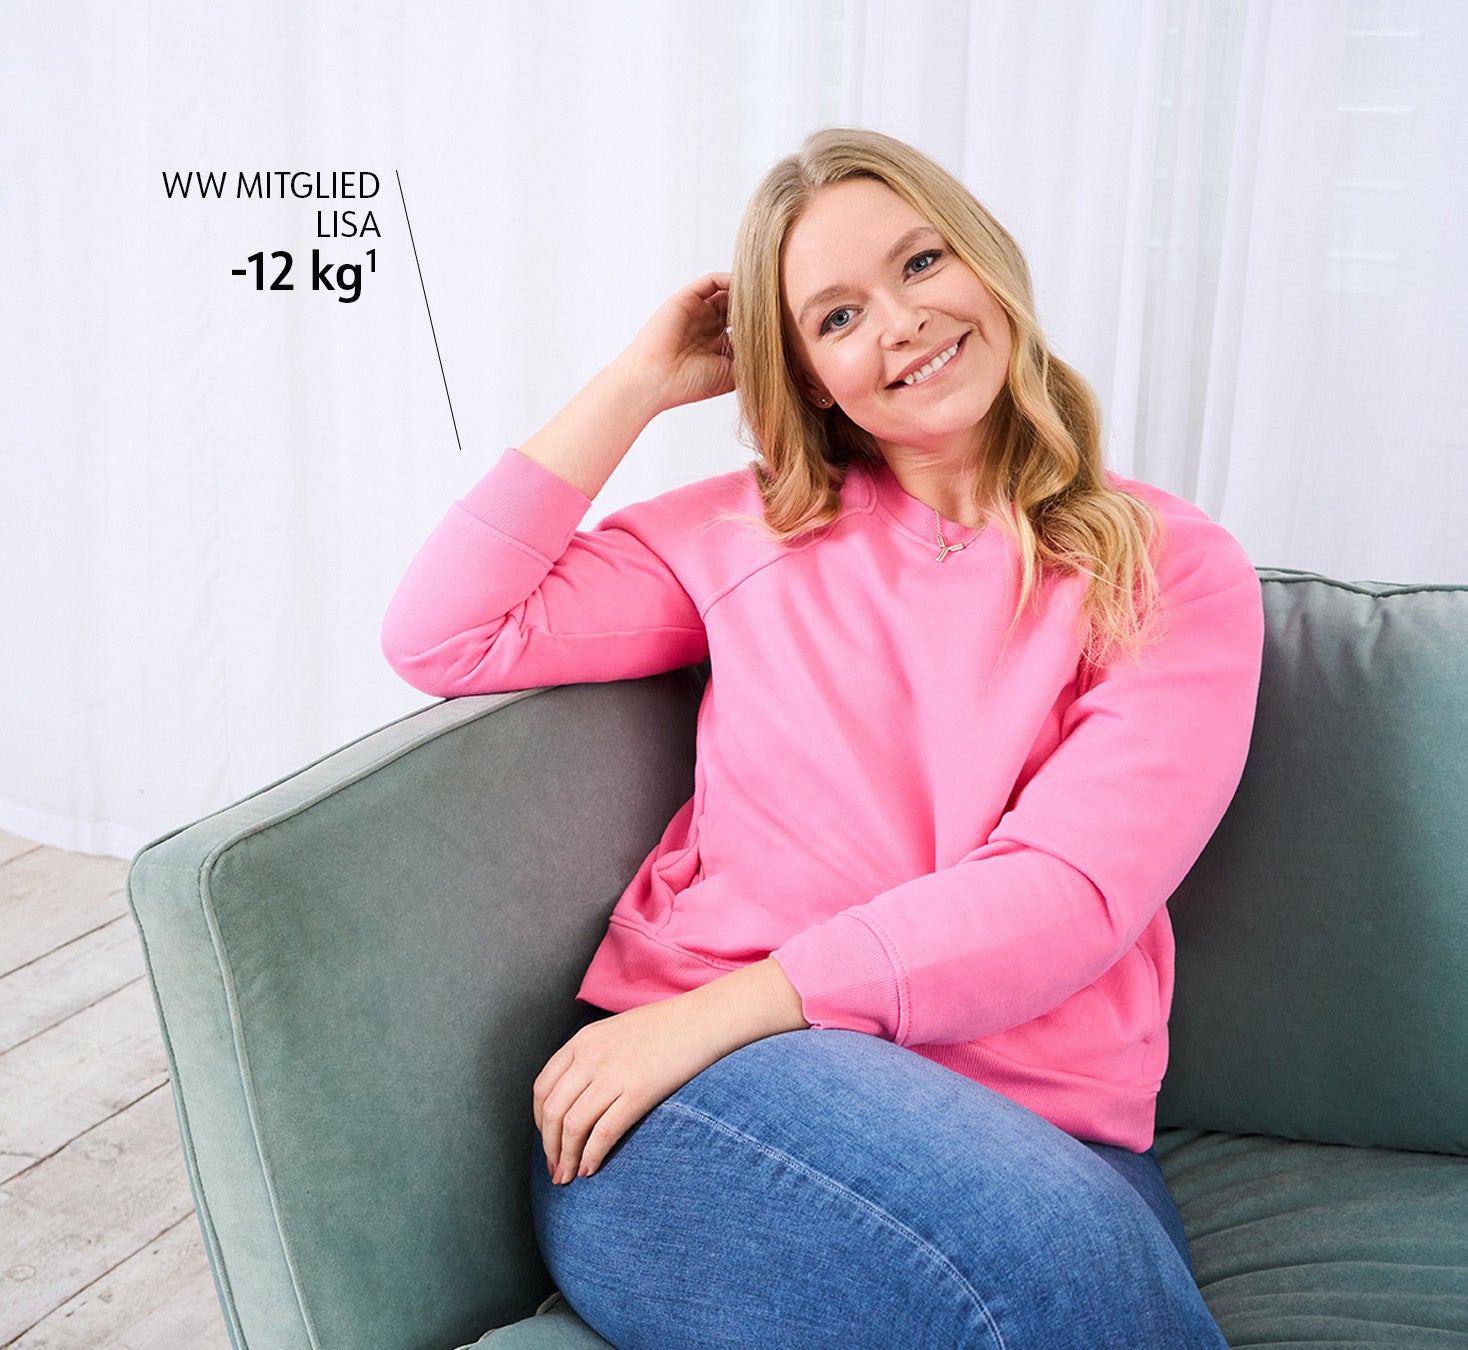 WW Mitglied Lisa in rosa Pullover sitzt auf Sofa